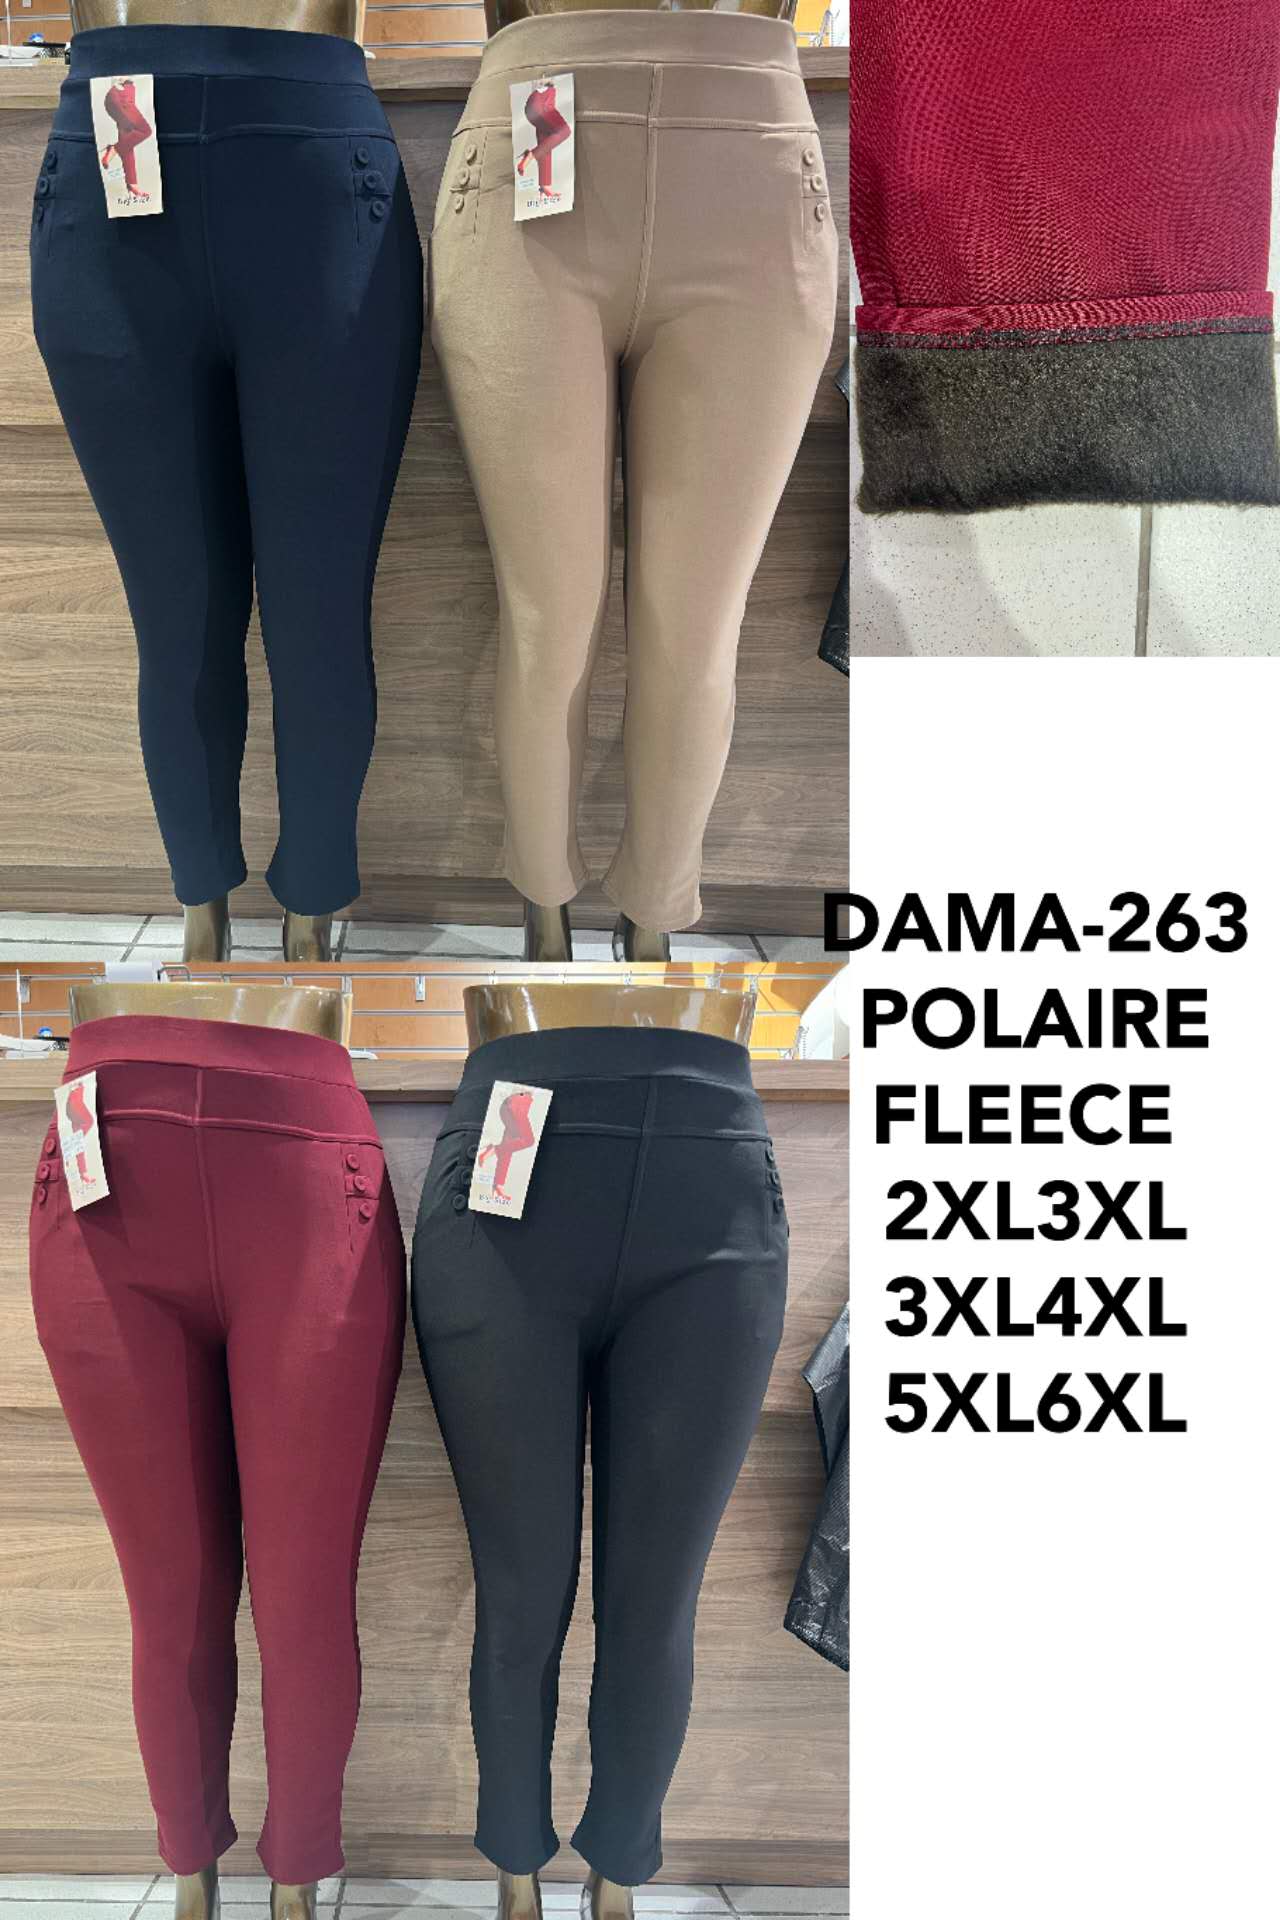 Large size women's pants (x12)